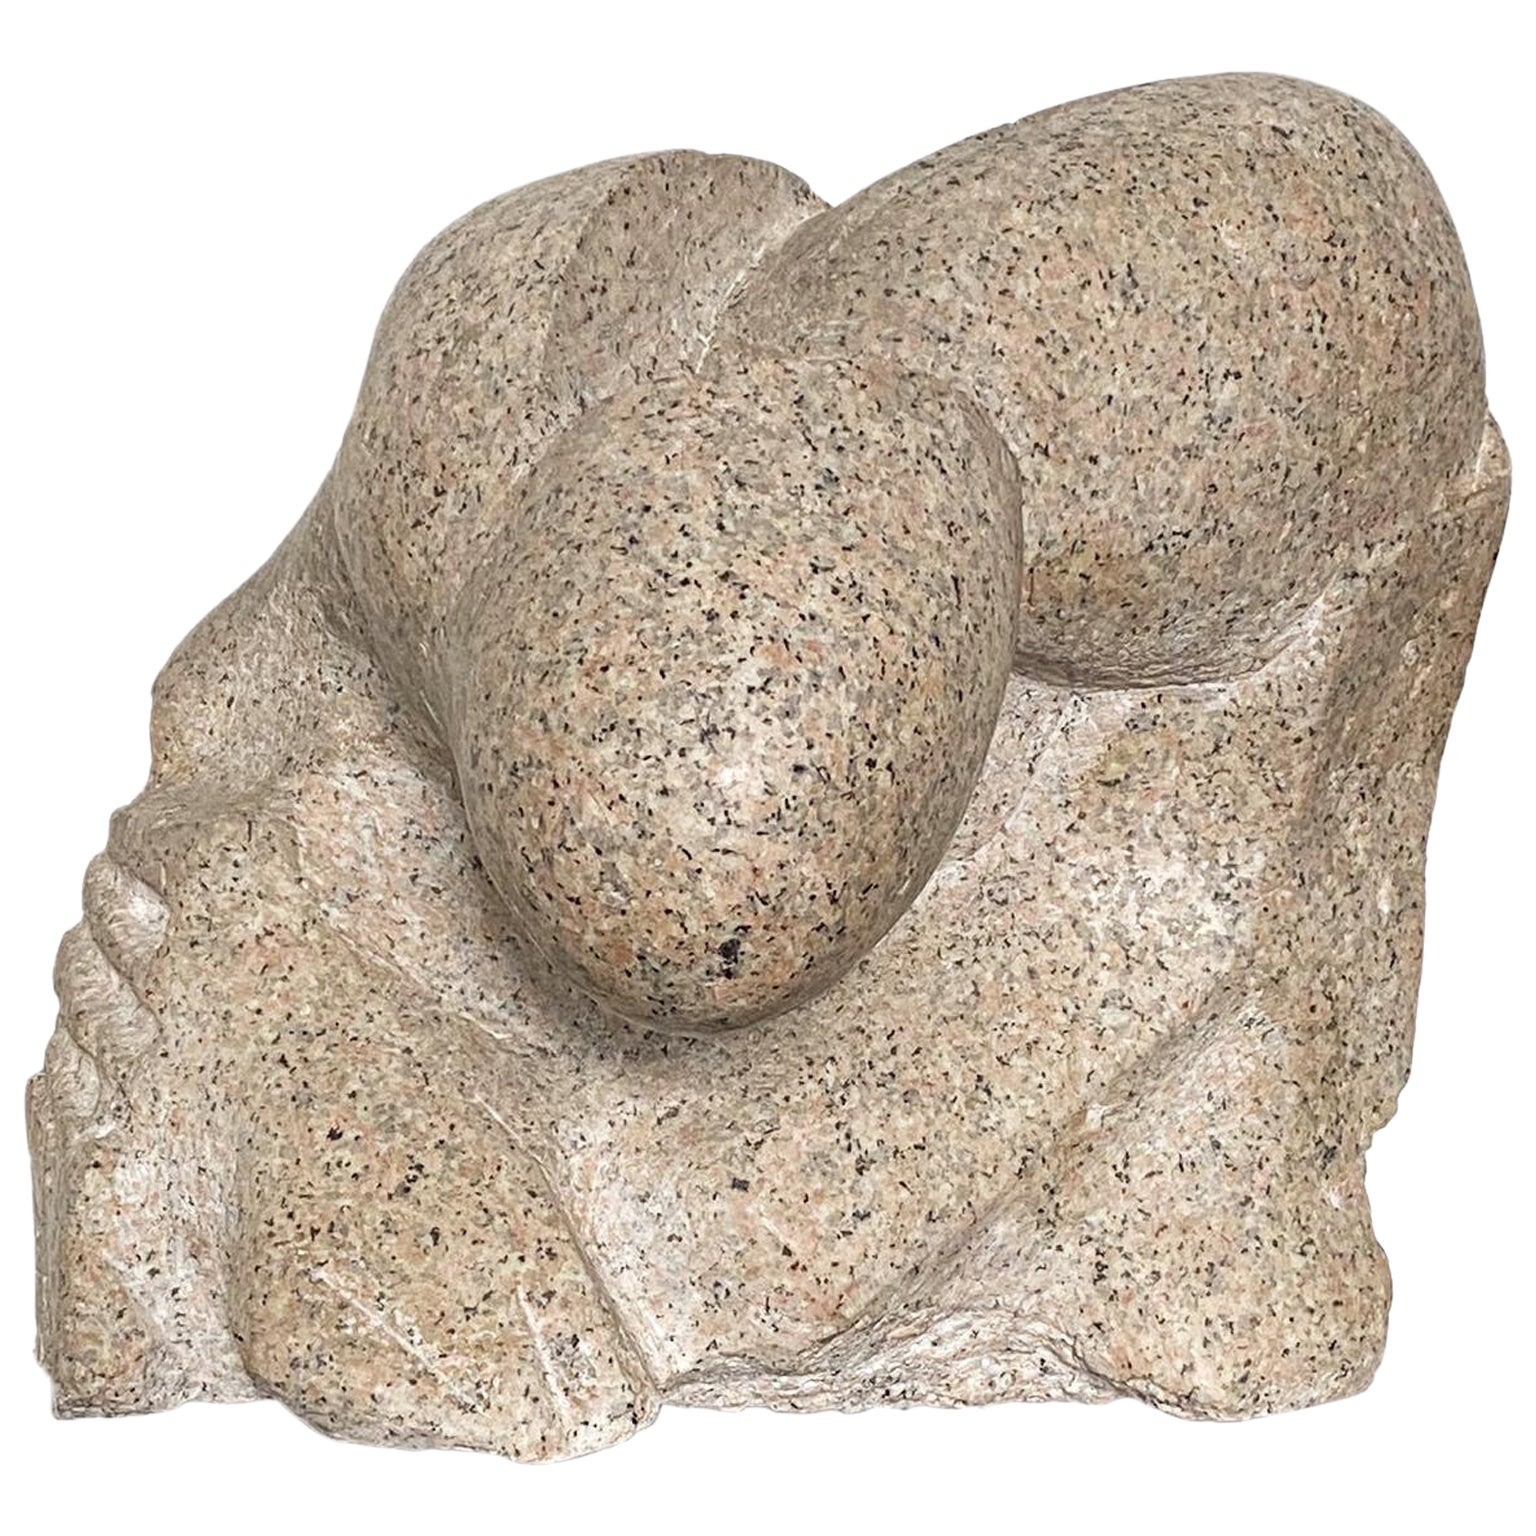 Sculpture en granit rose d'Aldo Flecchia